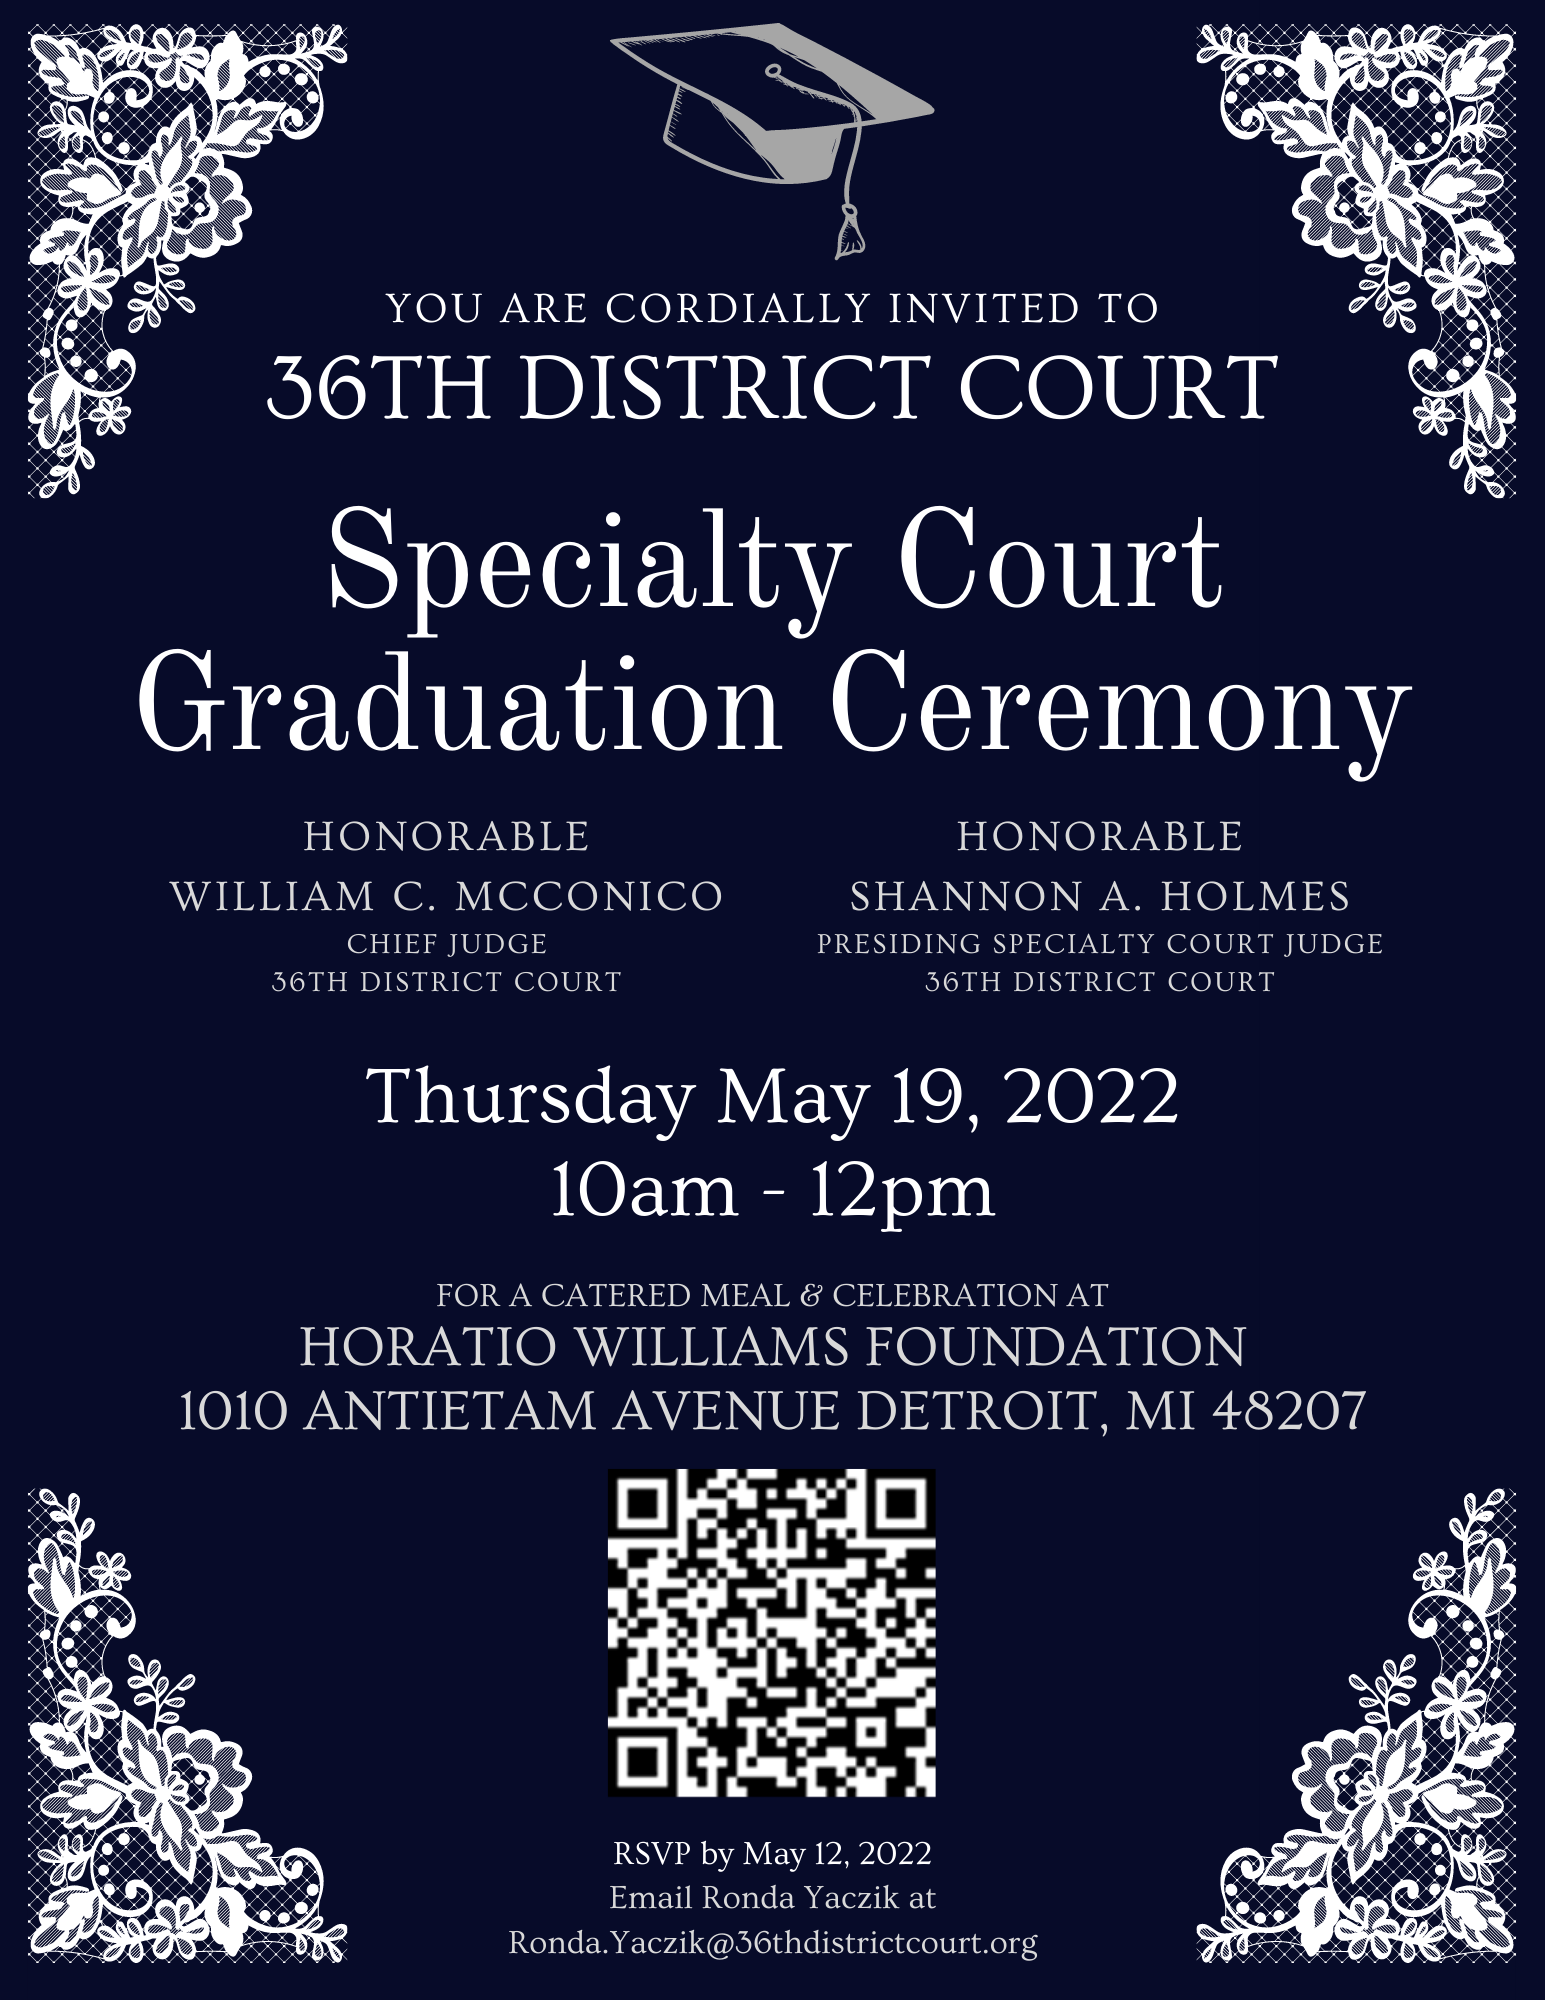 05.19.22 Specialty Court Graduation Ceremony Invitation Image